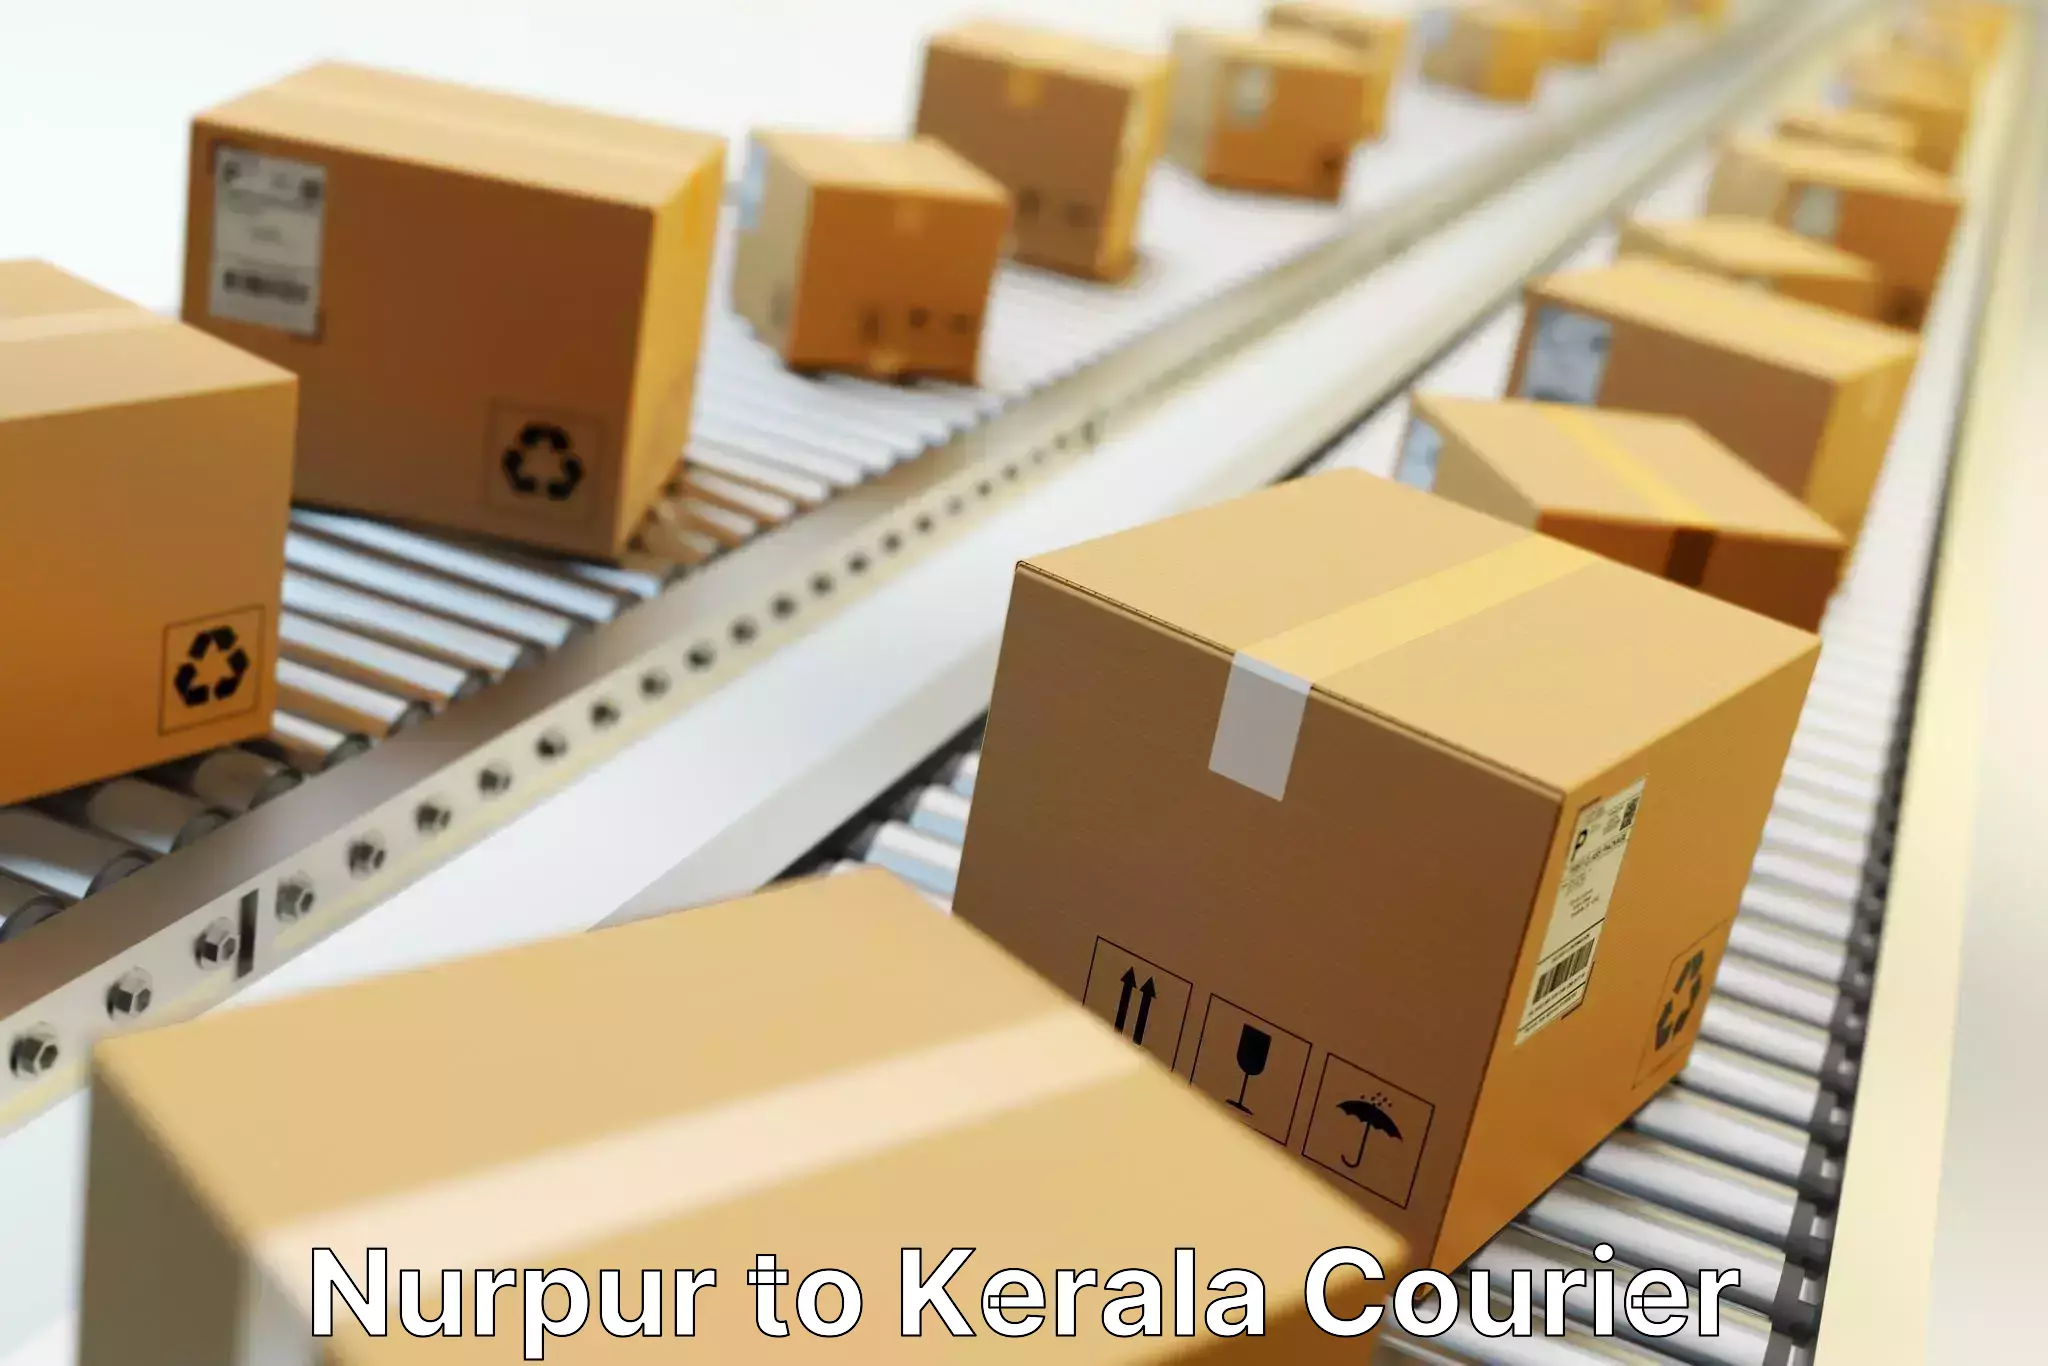 Bulk courier orders Nurpur to Cochin Port Kochi